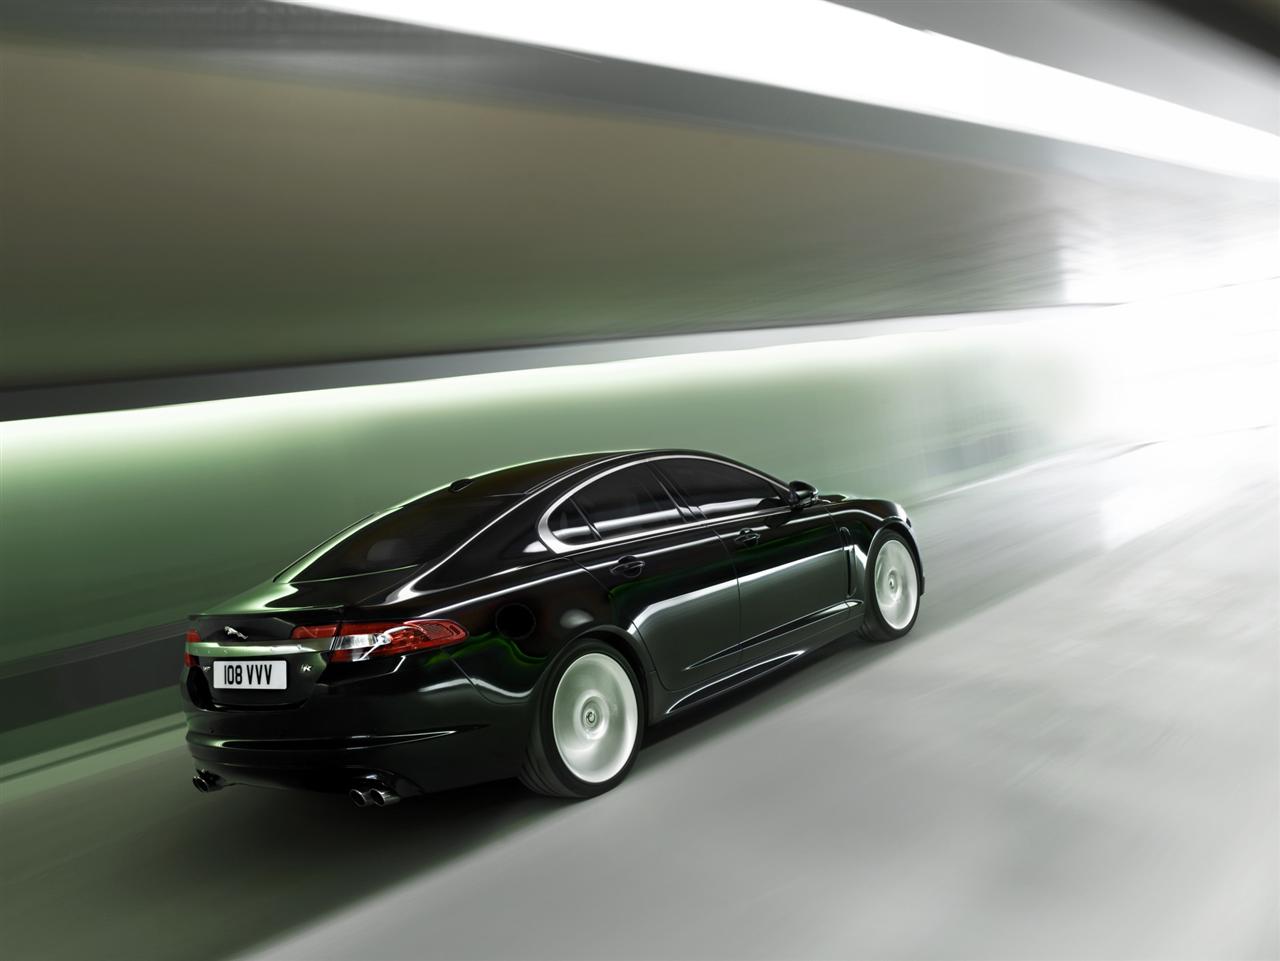 2011 Jaguar XF